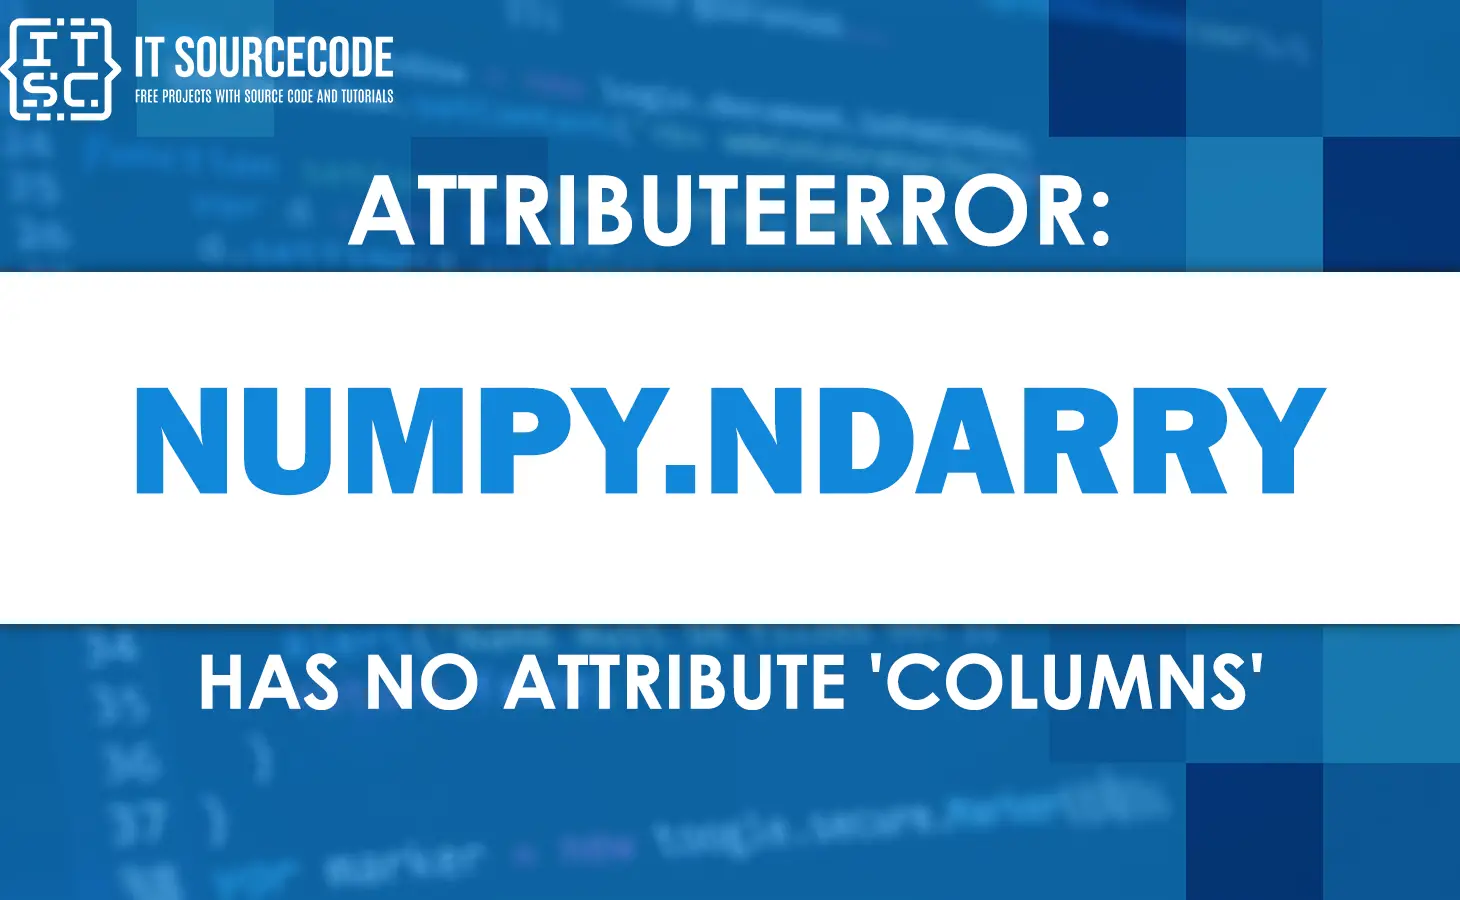 Attributeerror: 'numpy.ndarray' object has no attribute 'columns'